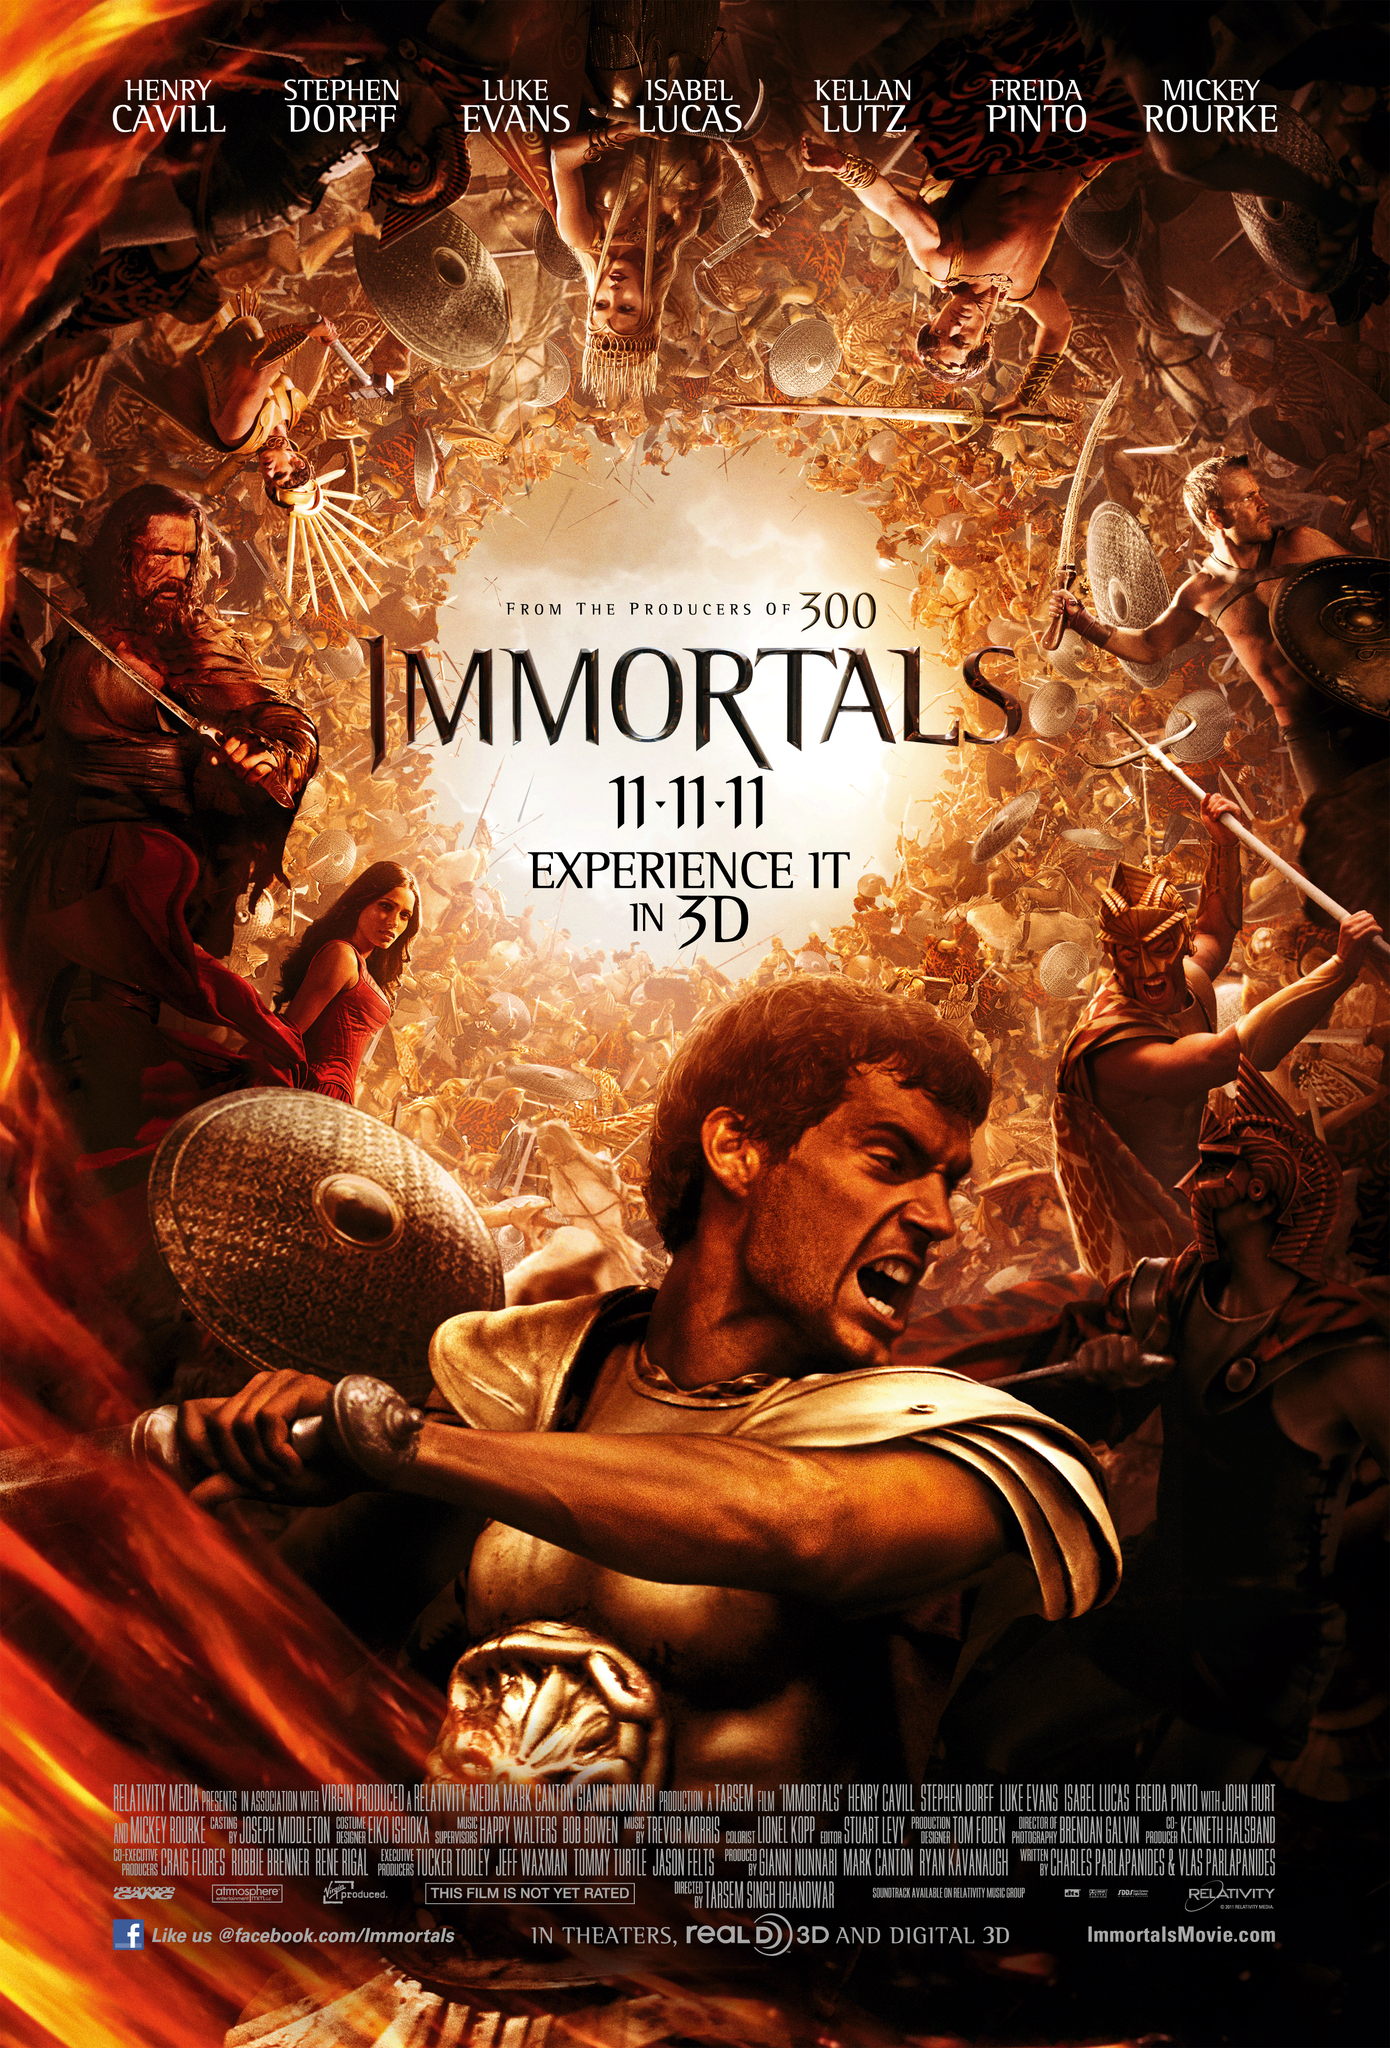 Immortals: Movie Like 300